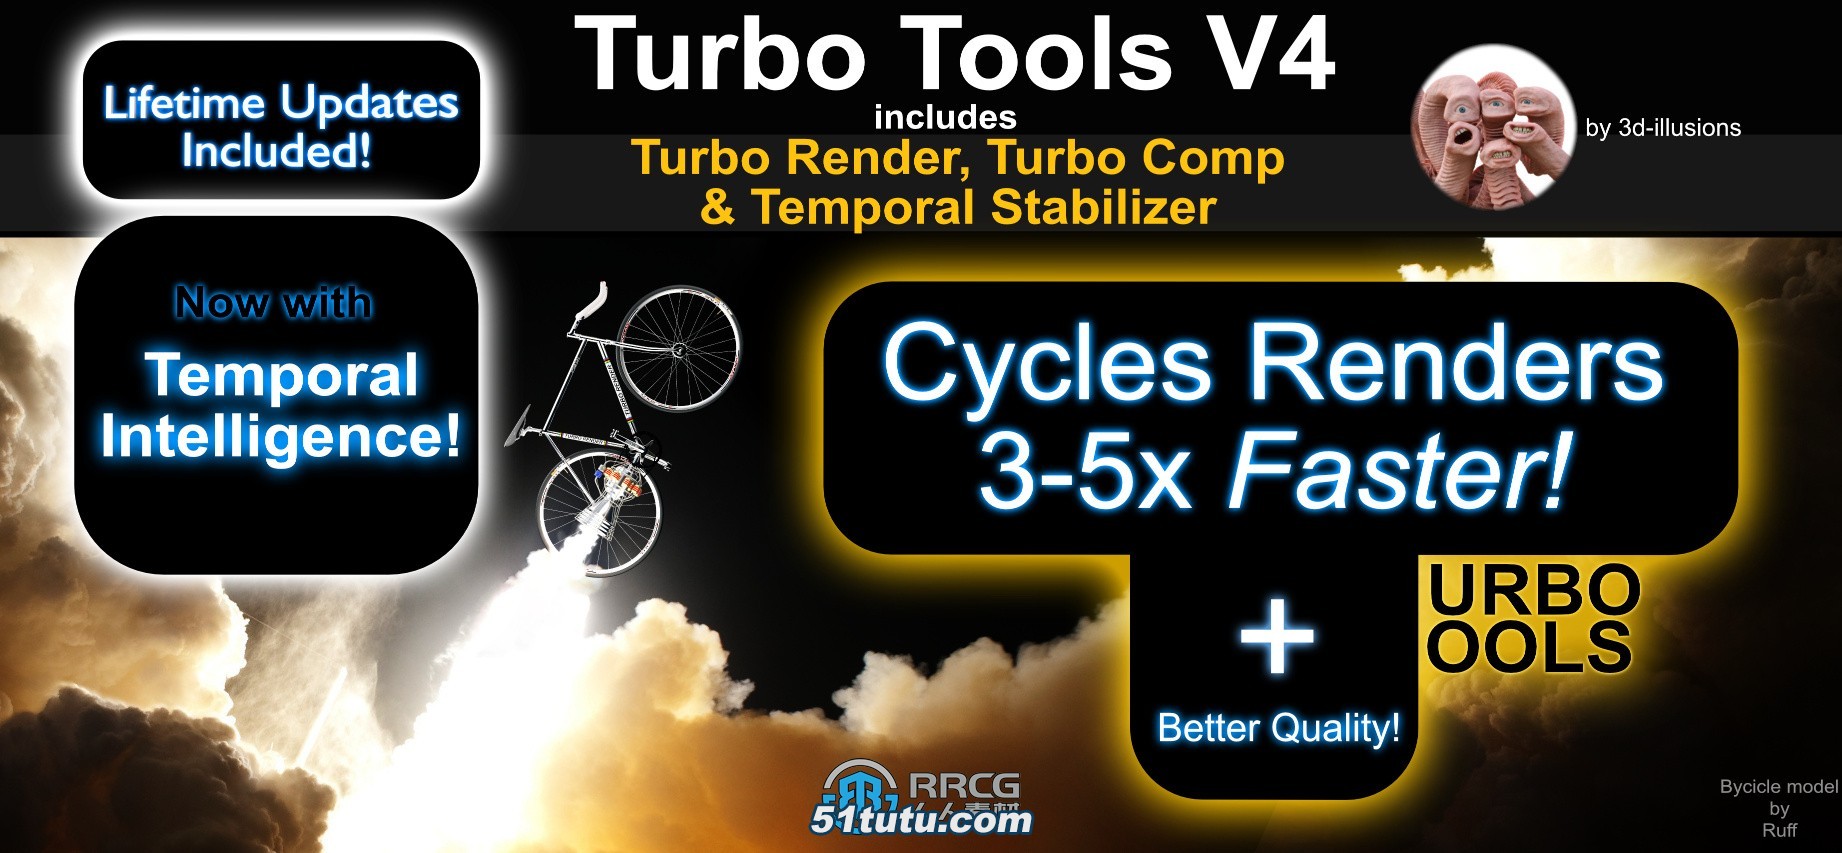 turbo tools渲染器稳定器合成器blender插件v4.0.7版